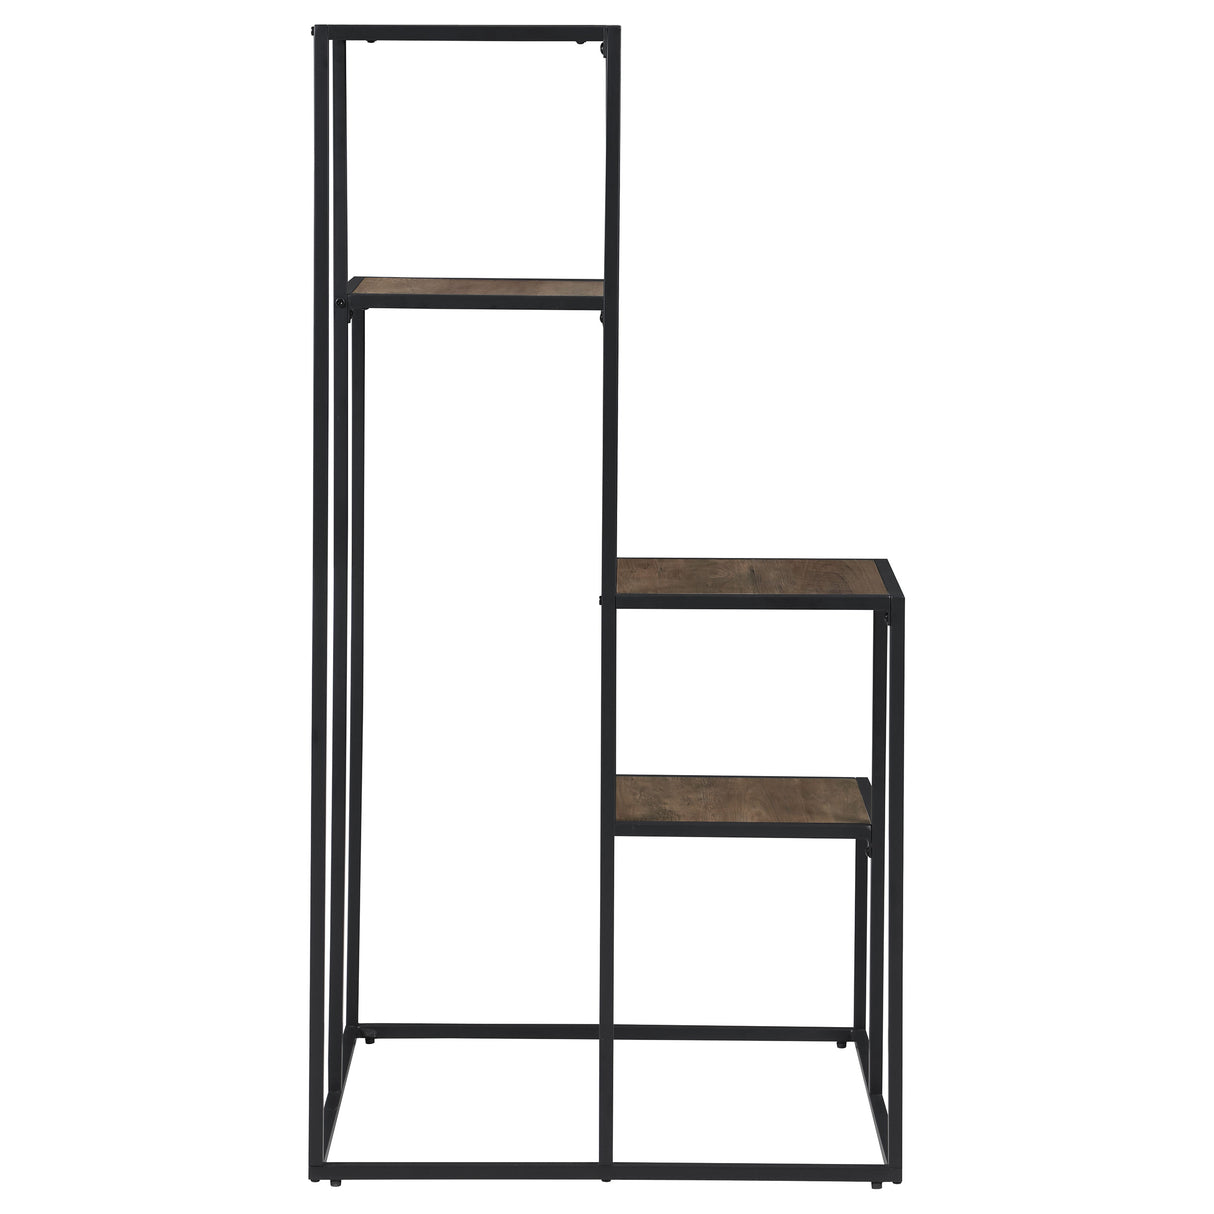 Display Shelf - Rito 4-tier Display Shelf Rustic Brown and Black